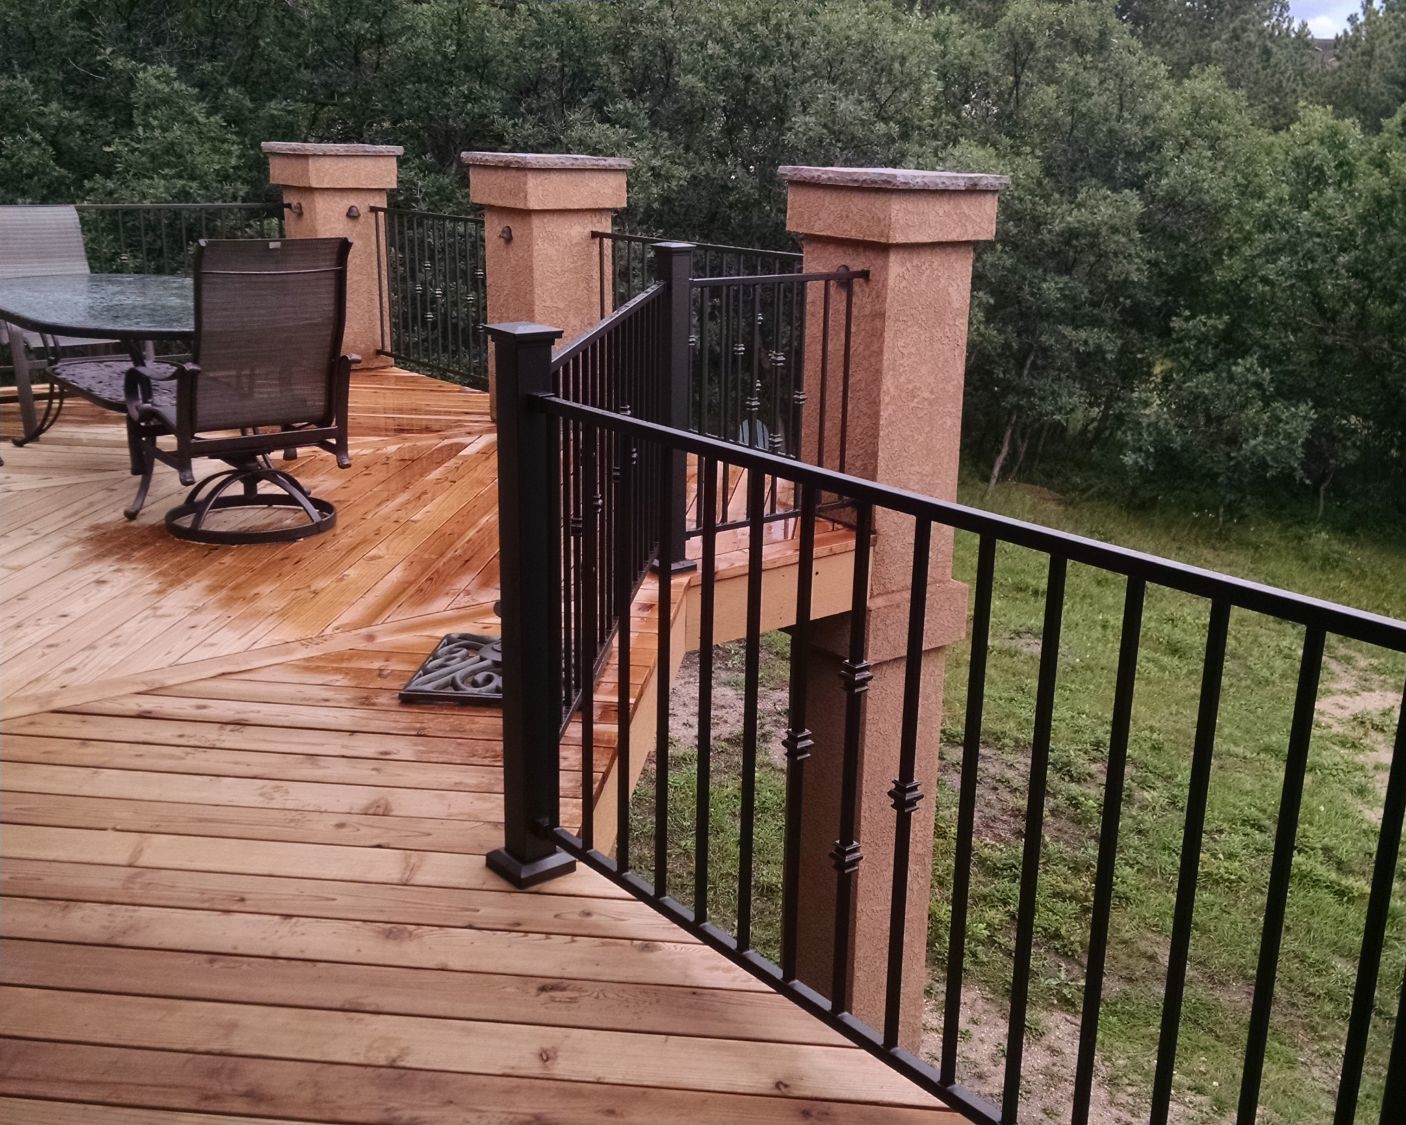 Heart redwood deck with a herringbone design, stucco columns, and metal panel railing.